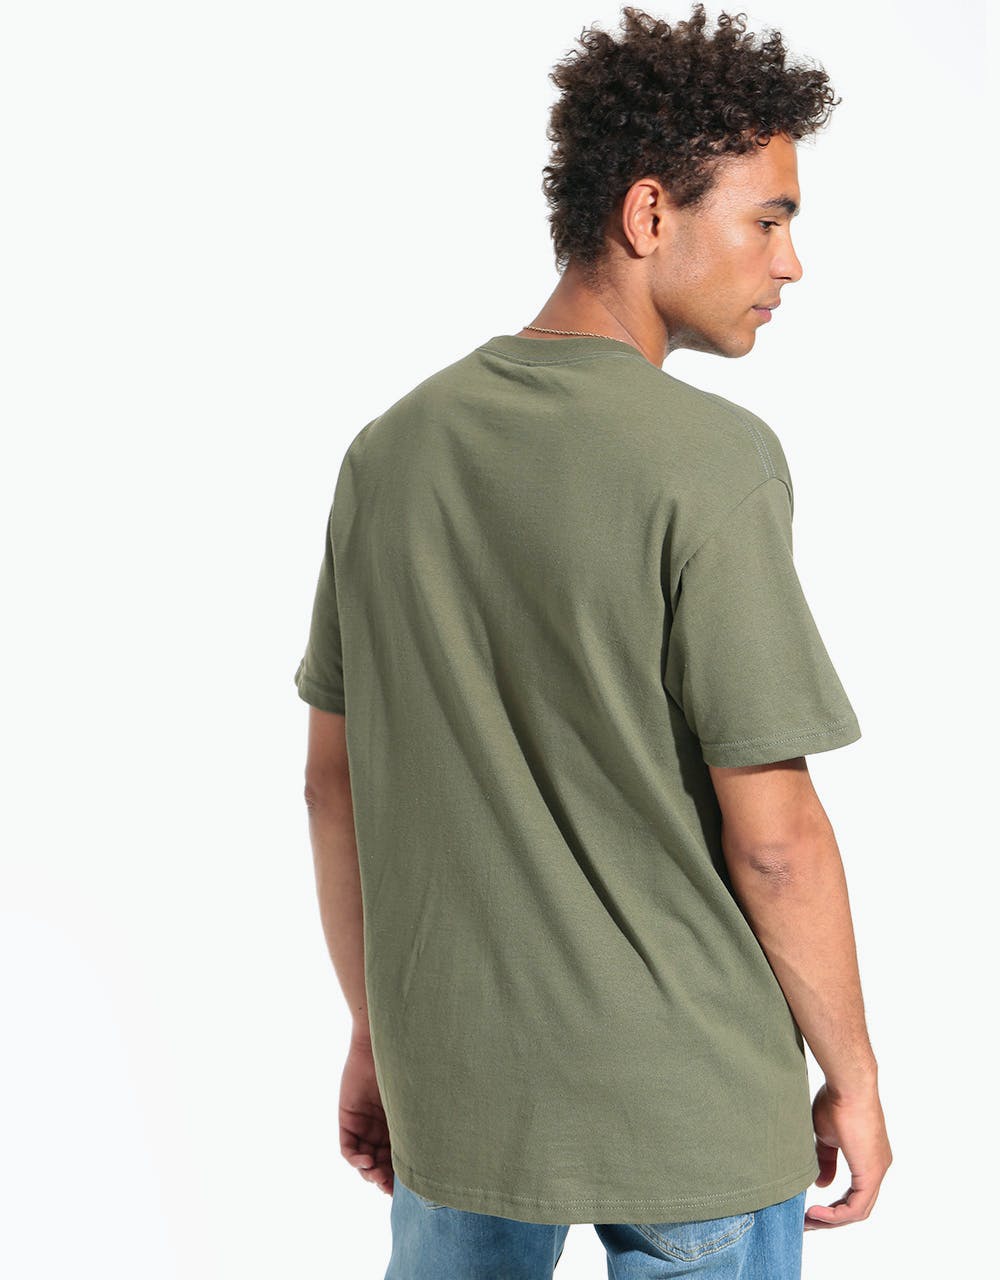 Primitive x Moebius Thing T-Shirt - Military Green